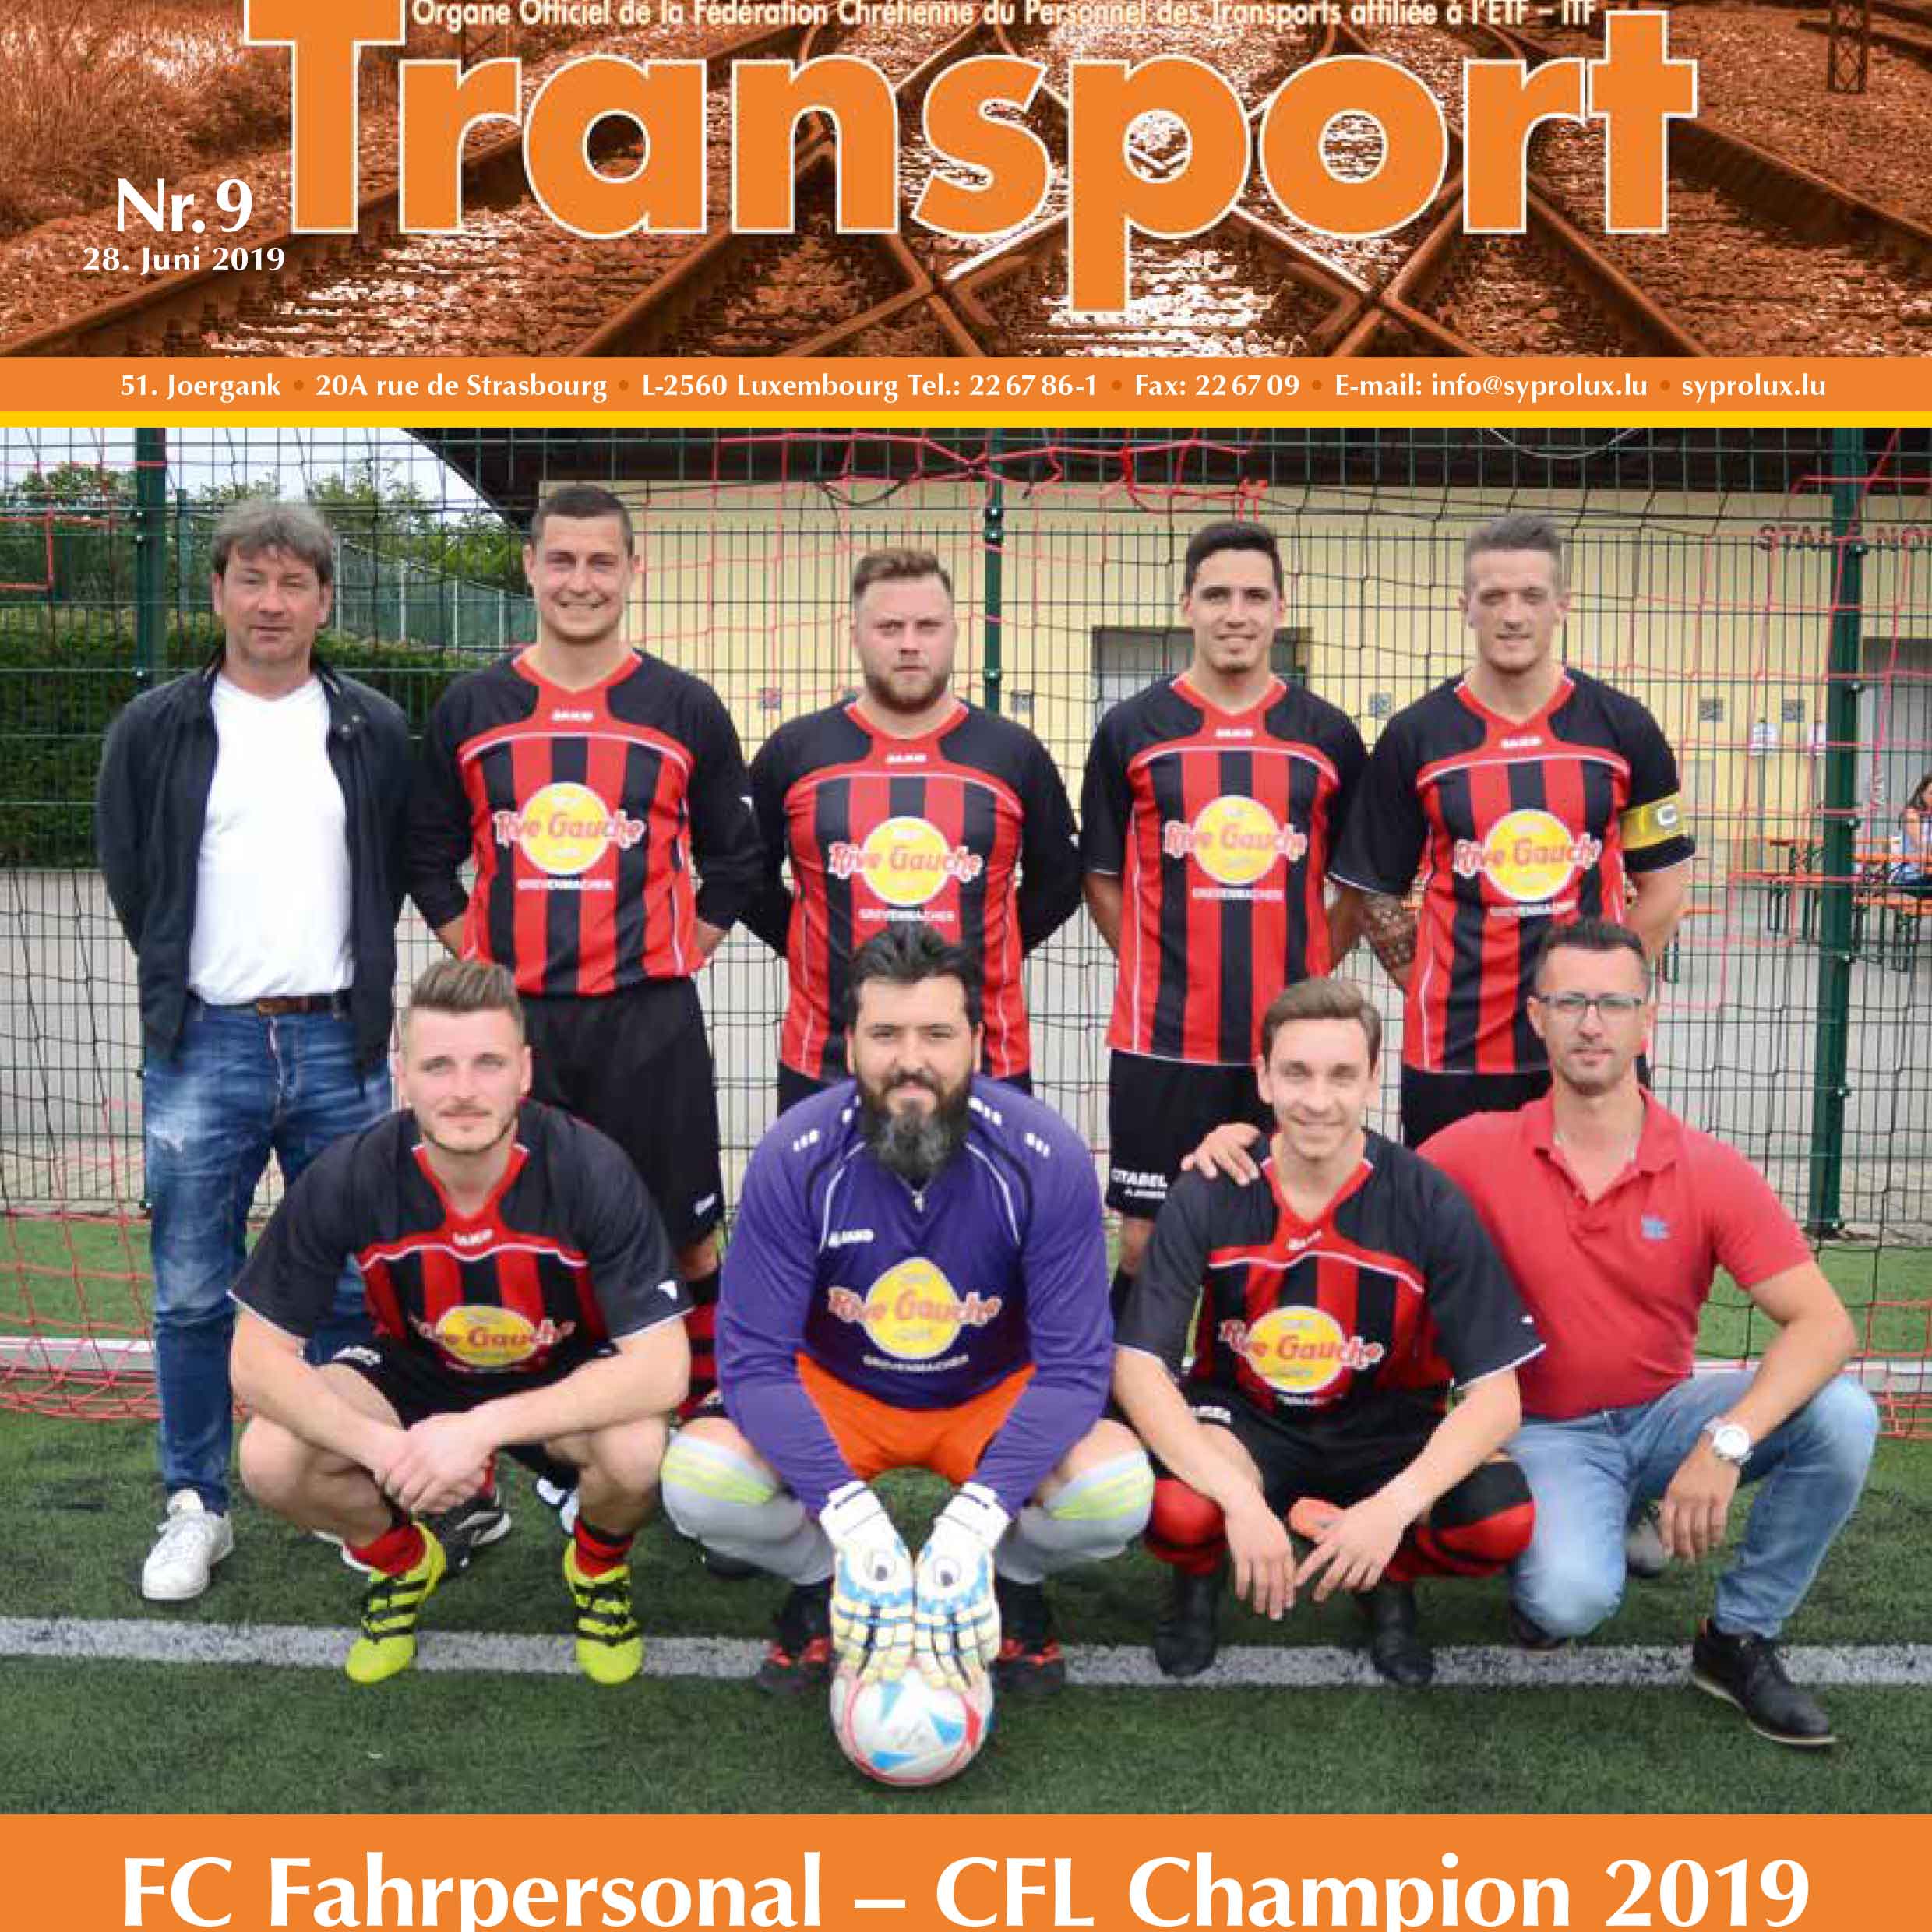 FC Fahrpersonal = CFL Champion 2019